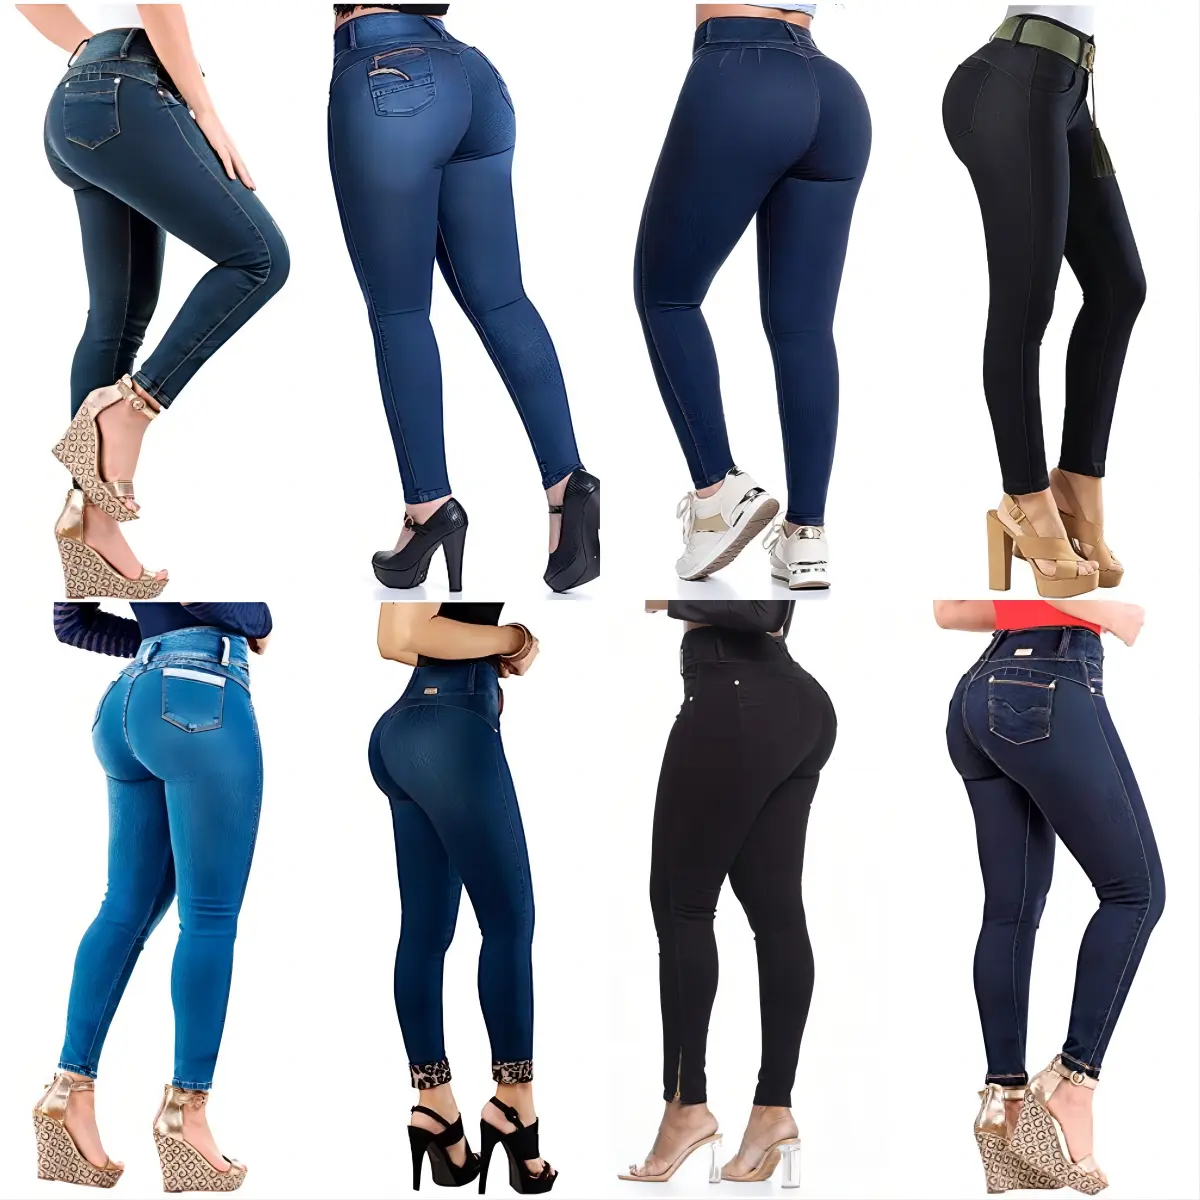 Calças jeans femininas plus size justinas, calças justas justinas de azul claro, calças jeans femininas desgastadas